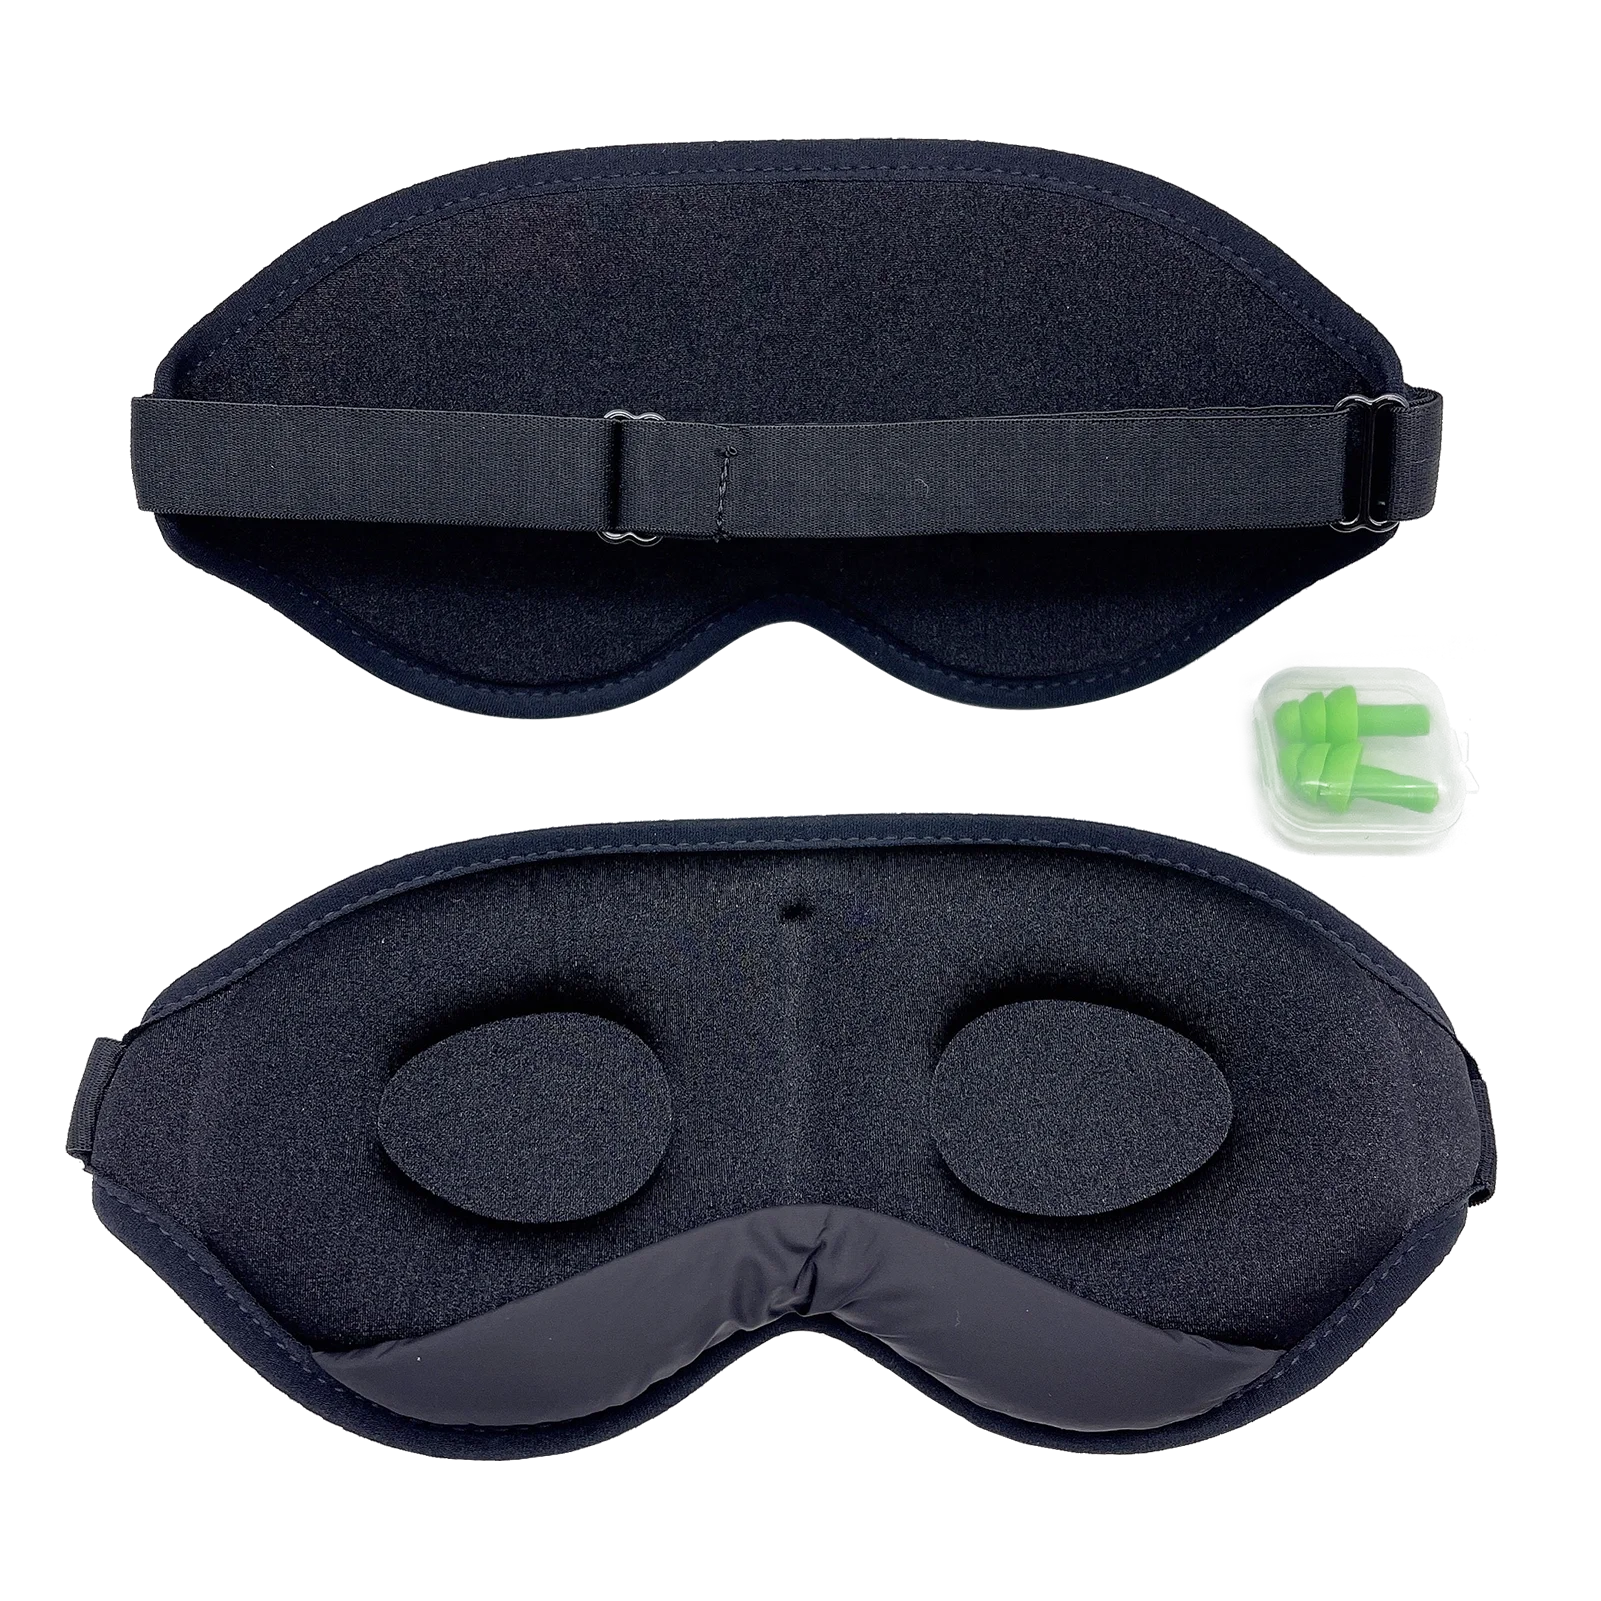 

Low moq fast shipping custom logo 3d sleep eye mask for men women sleeping with earplugs